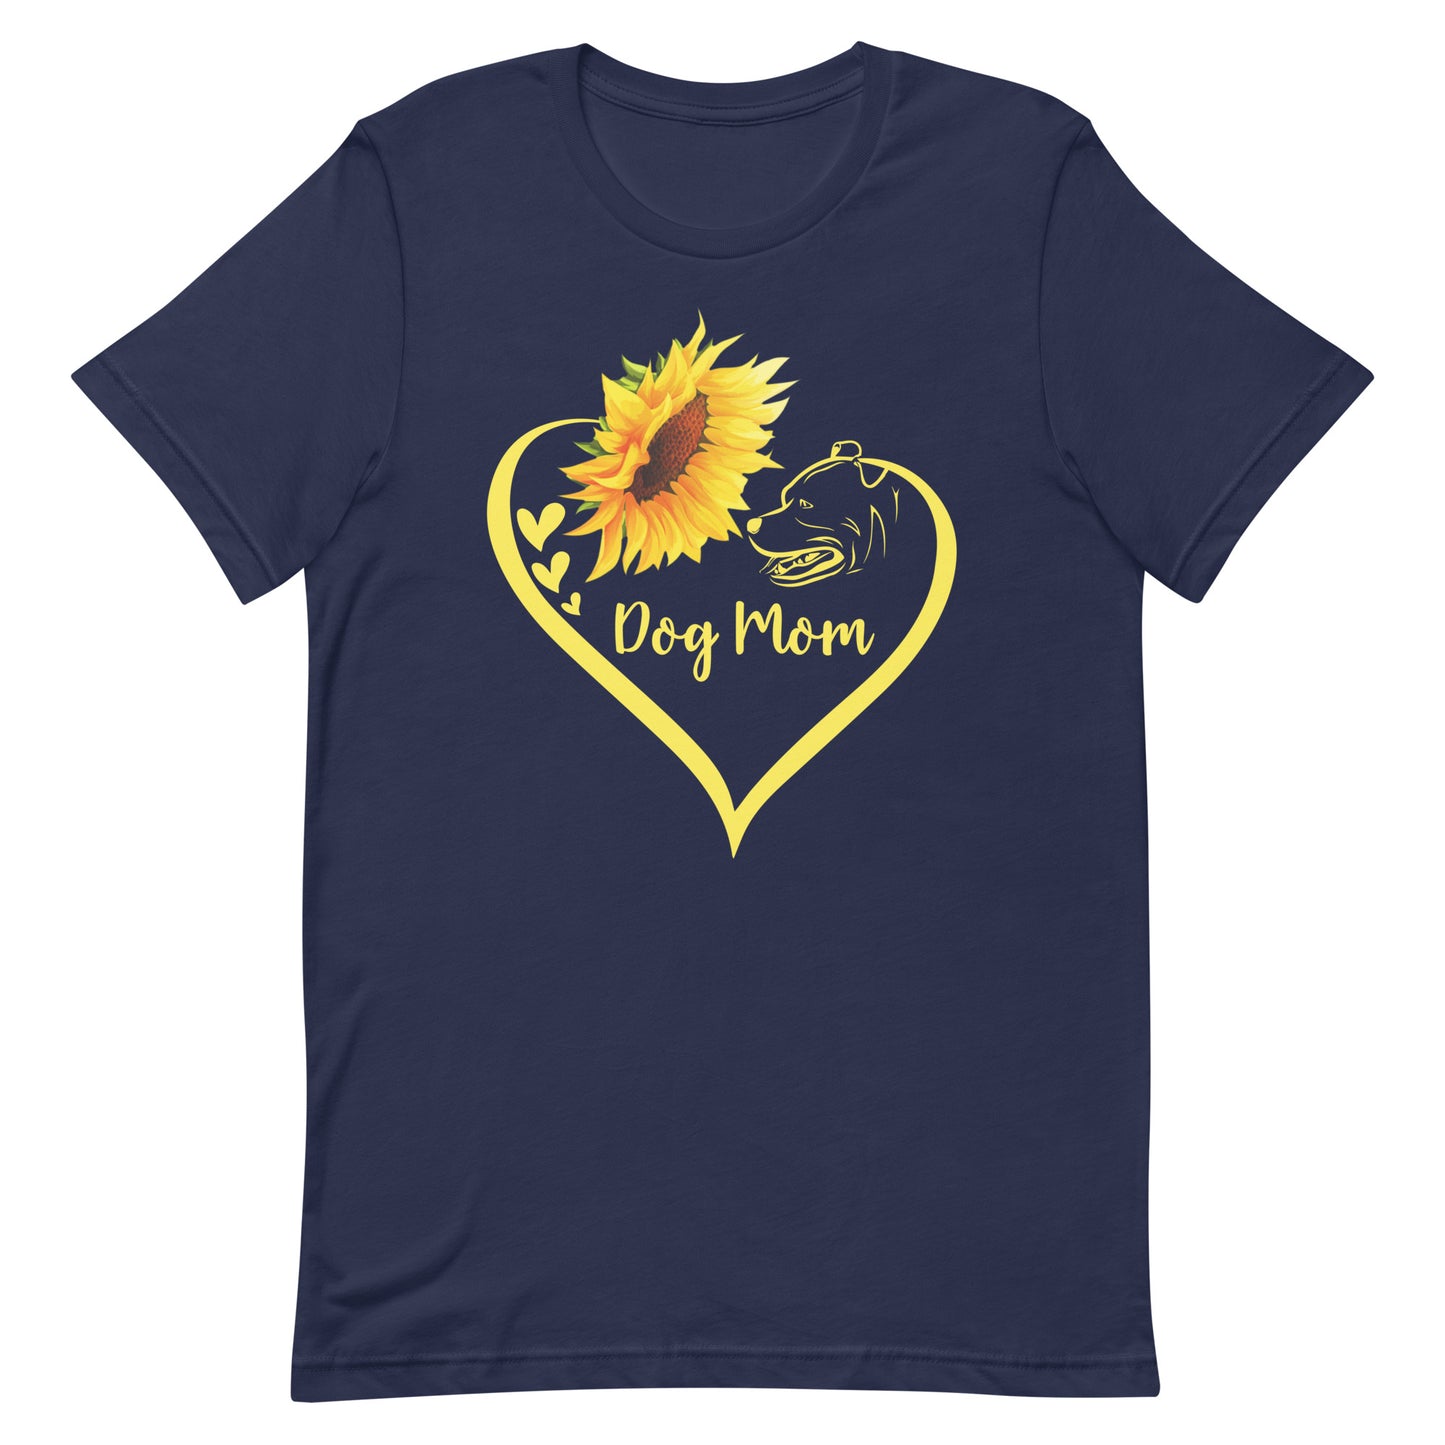 Dog Mom Sunflower T-Shirt